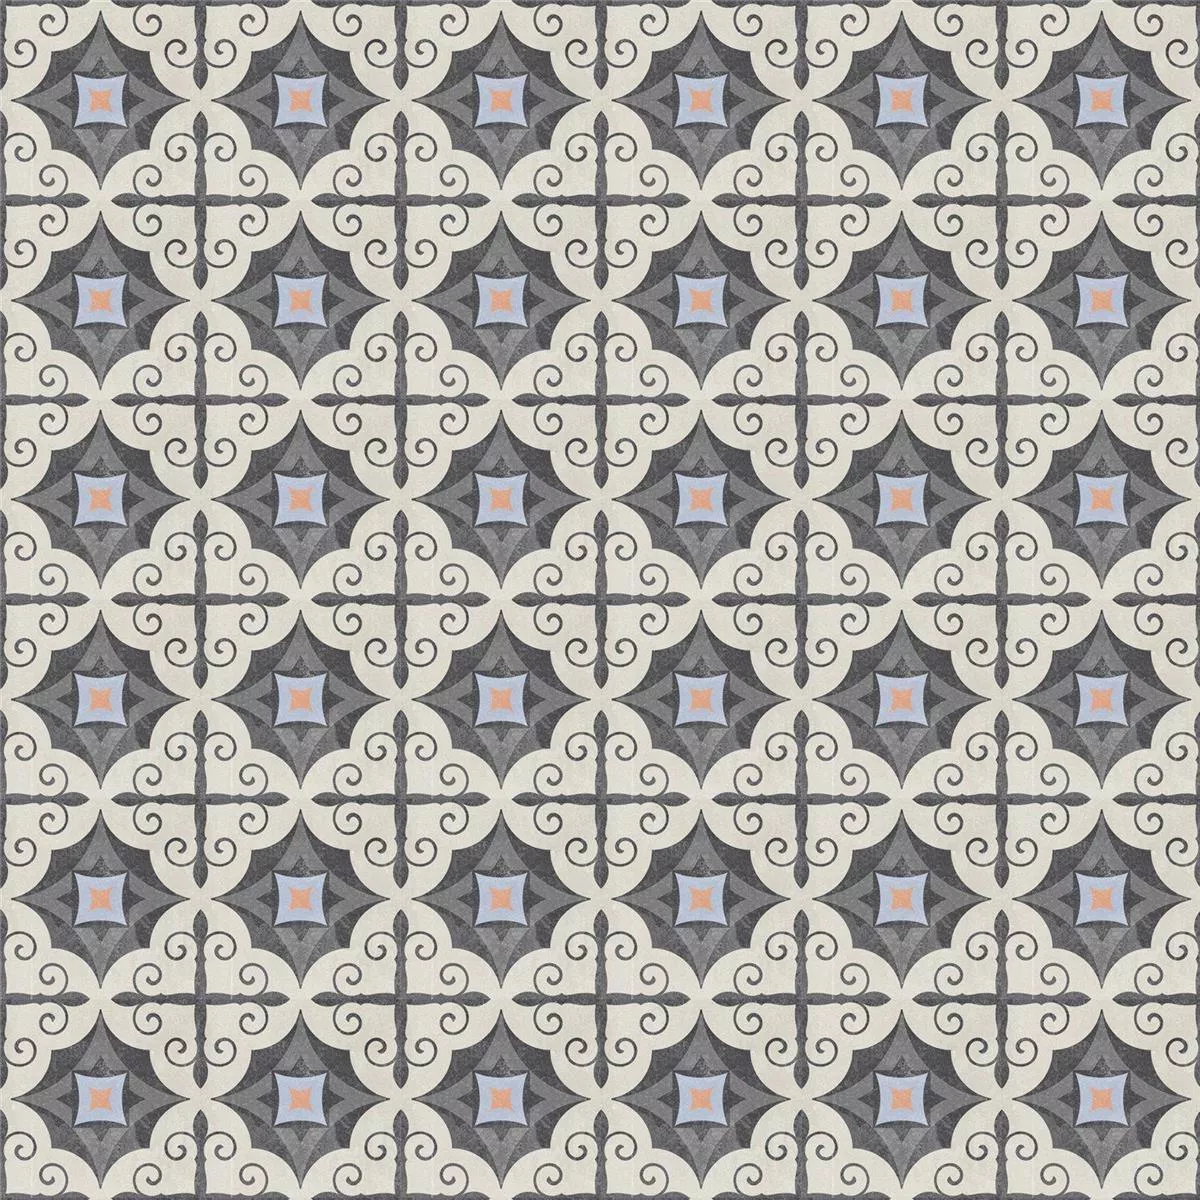 Sample Cement Tiles Retro Optic Gris Floor Tiles Serrano 18,6x18,6cm